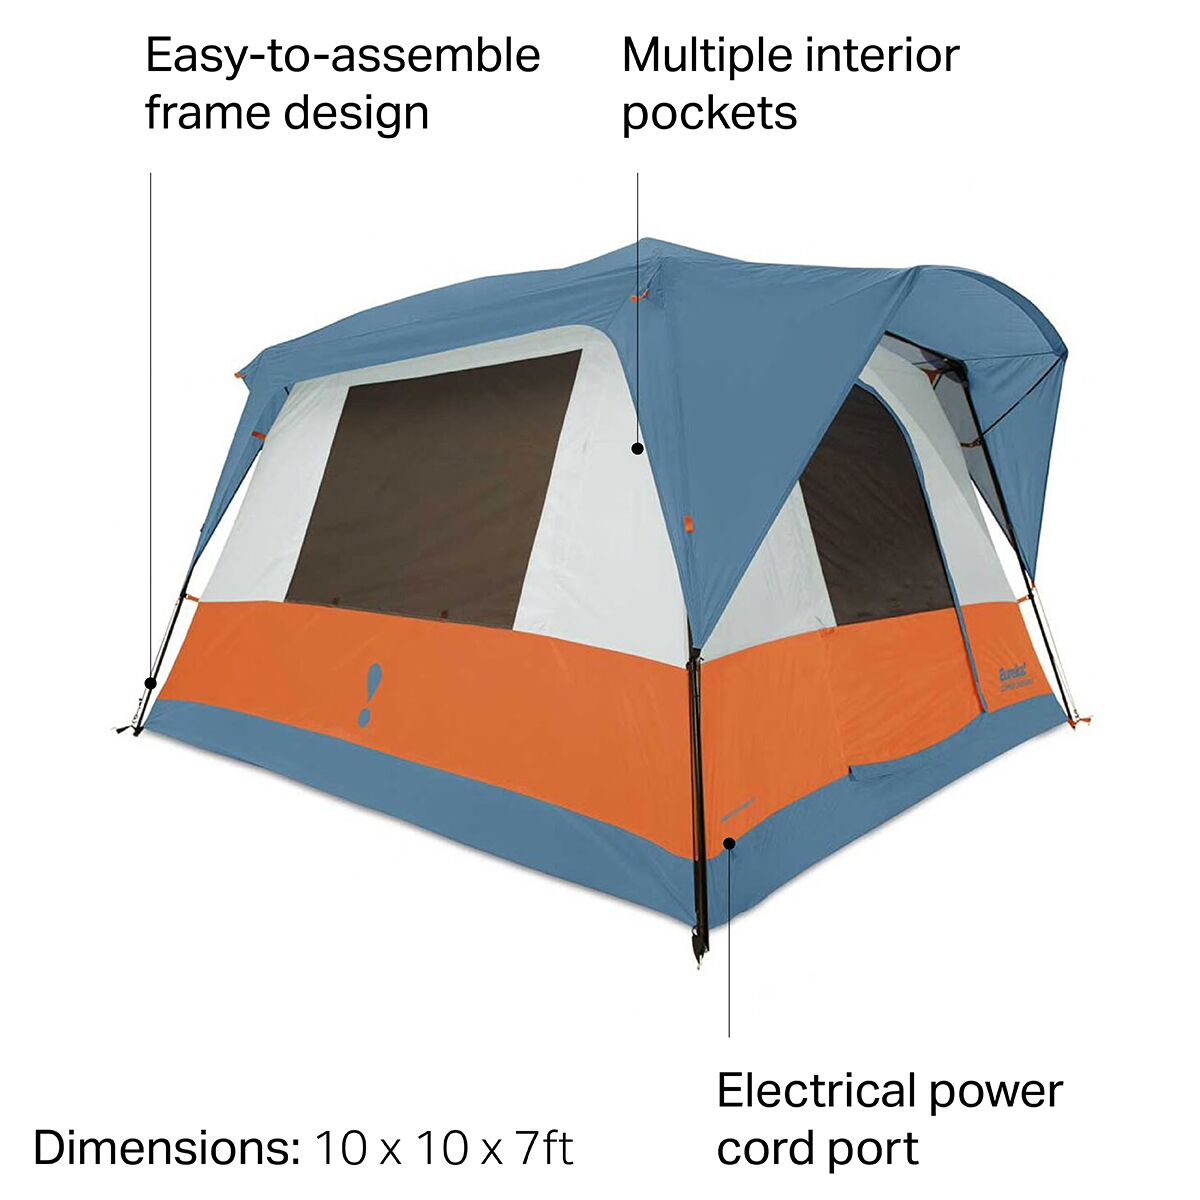  Eureka! Copper Canyon LX Tent: 3-Season 6 Person - Hike & Camp